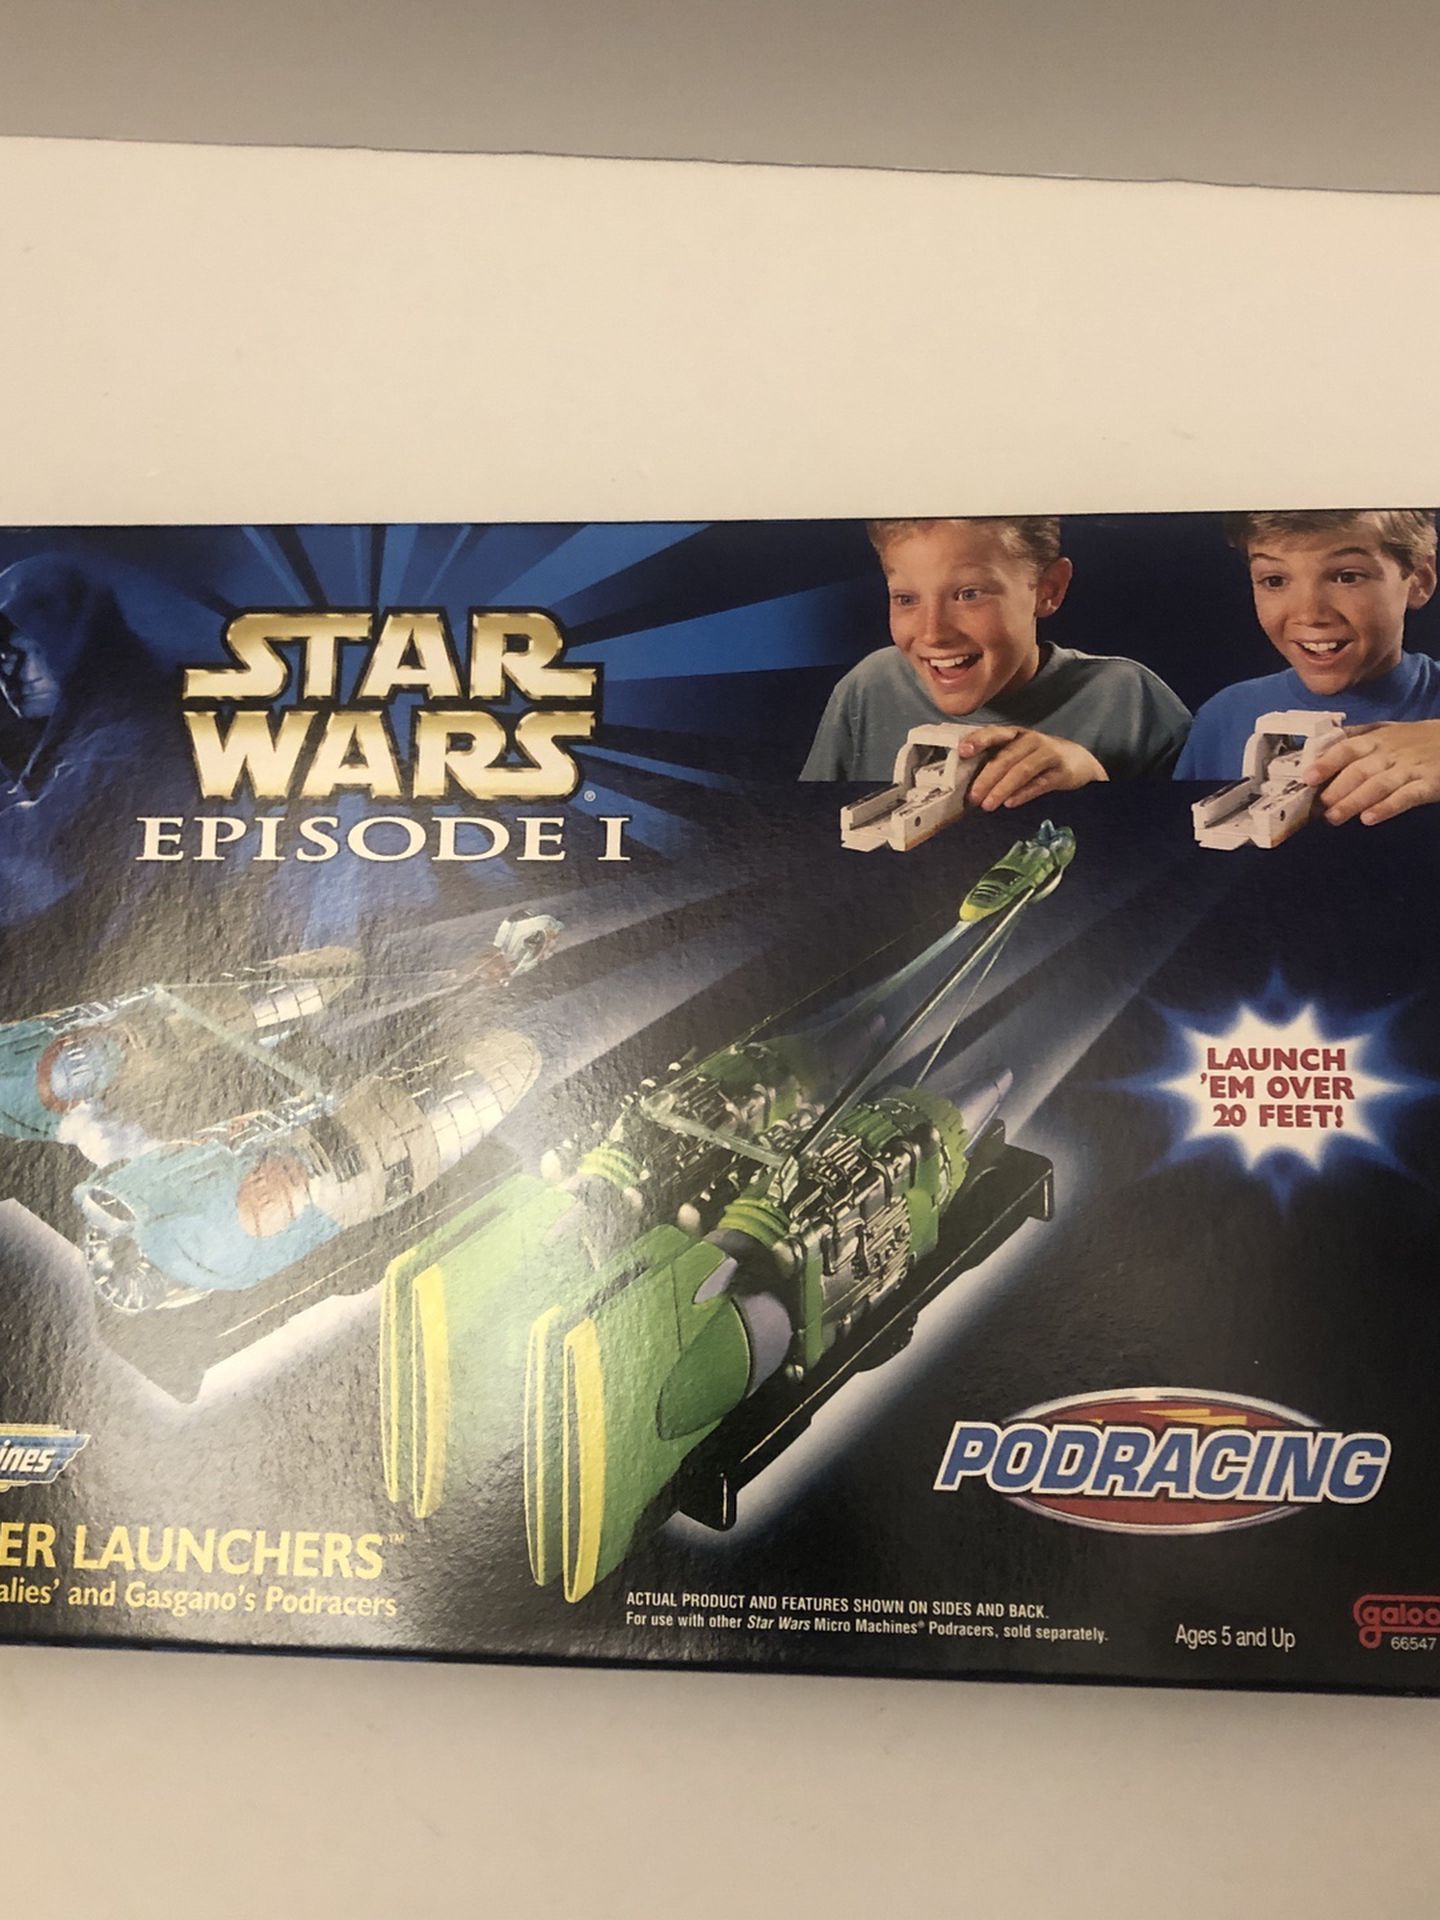 Star Wars Episode 1 Podracer launchers With Pod Racer Pack 1